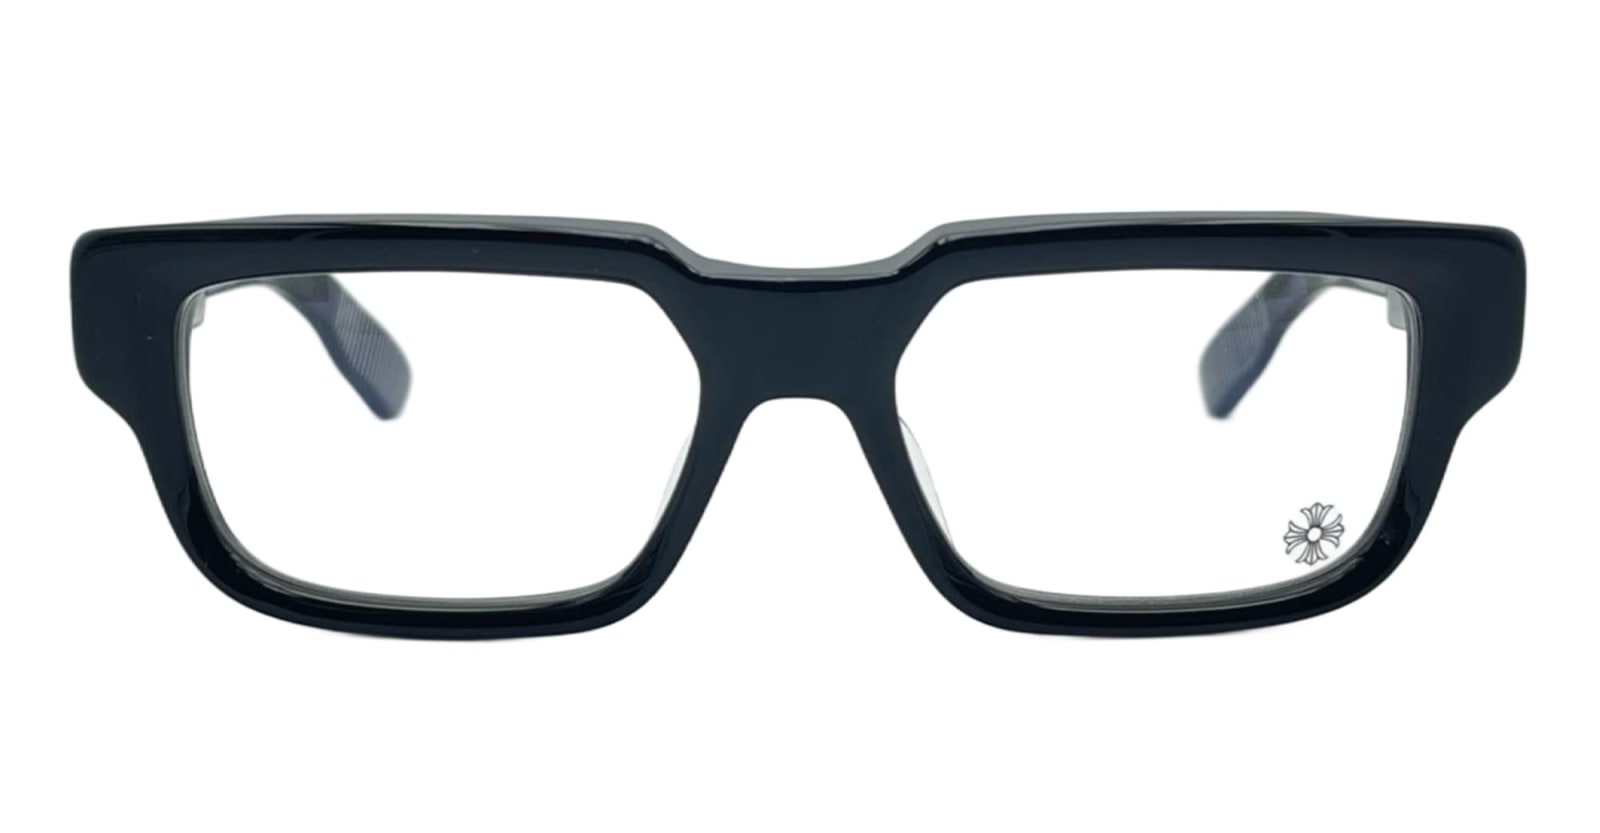 2 Thick - Black Rx Glasses